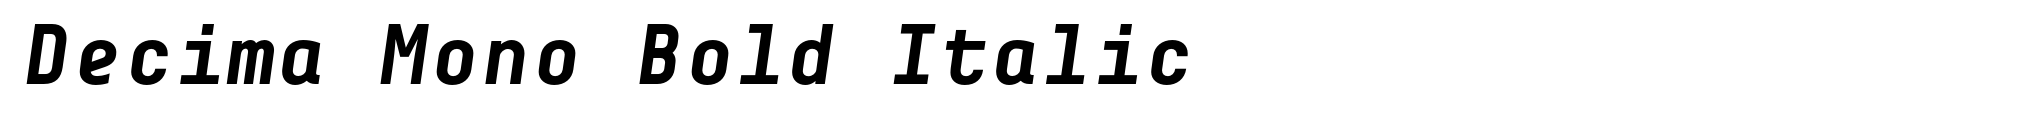 Decima Mono Bold Italic image